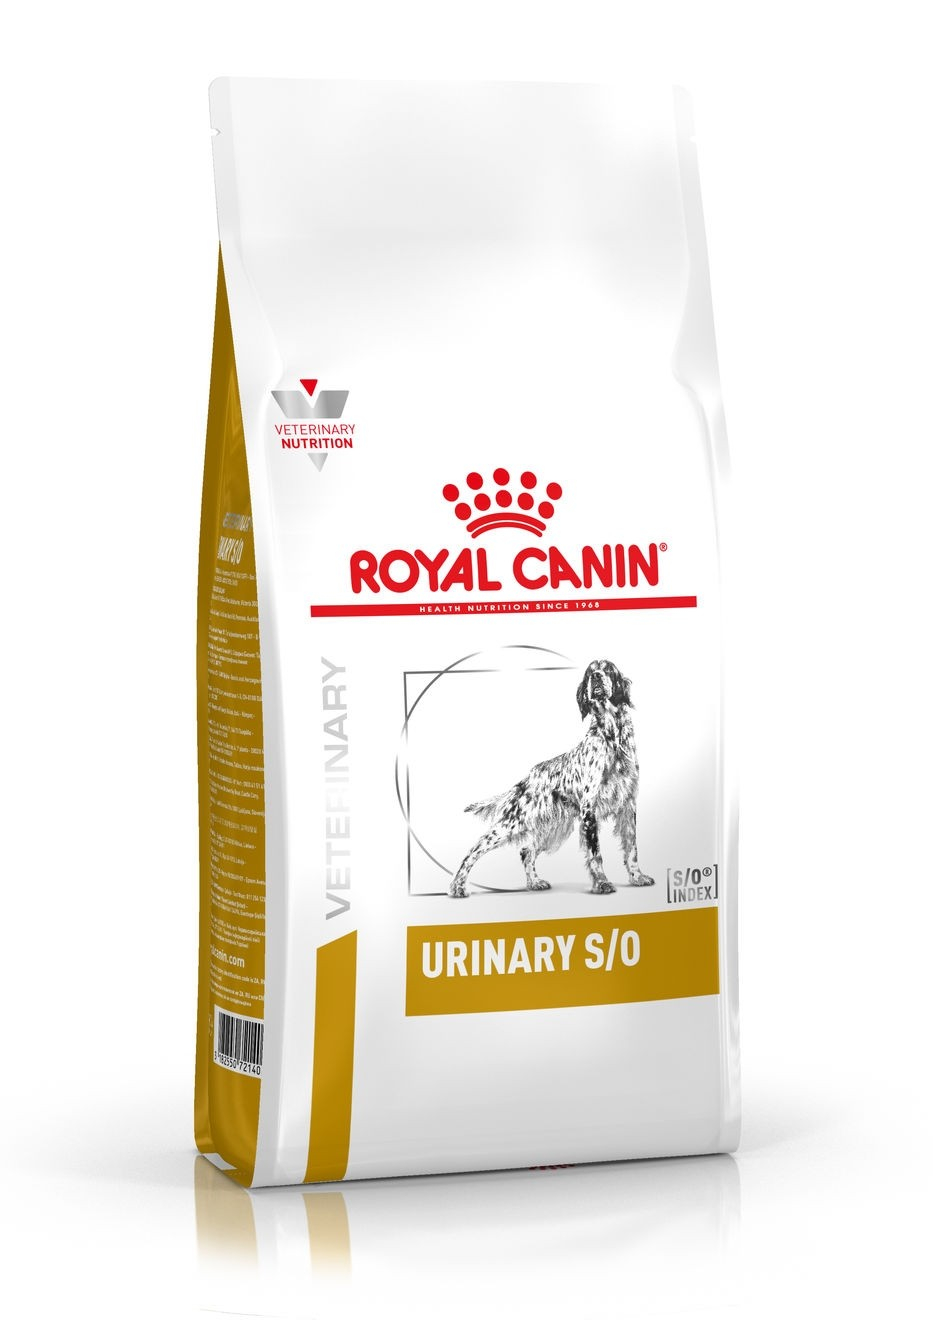 Royal Canin Veterinary Urinary S/O crocchette per cane